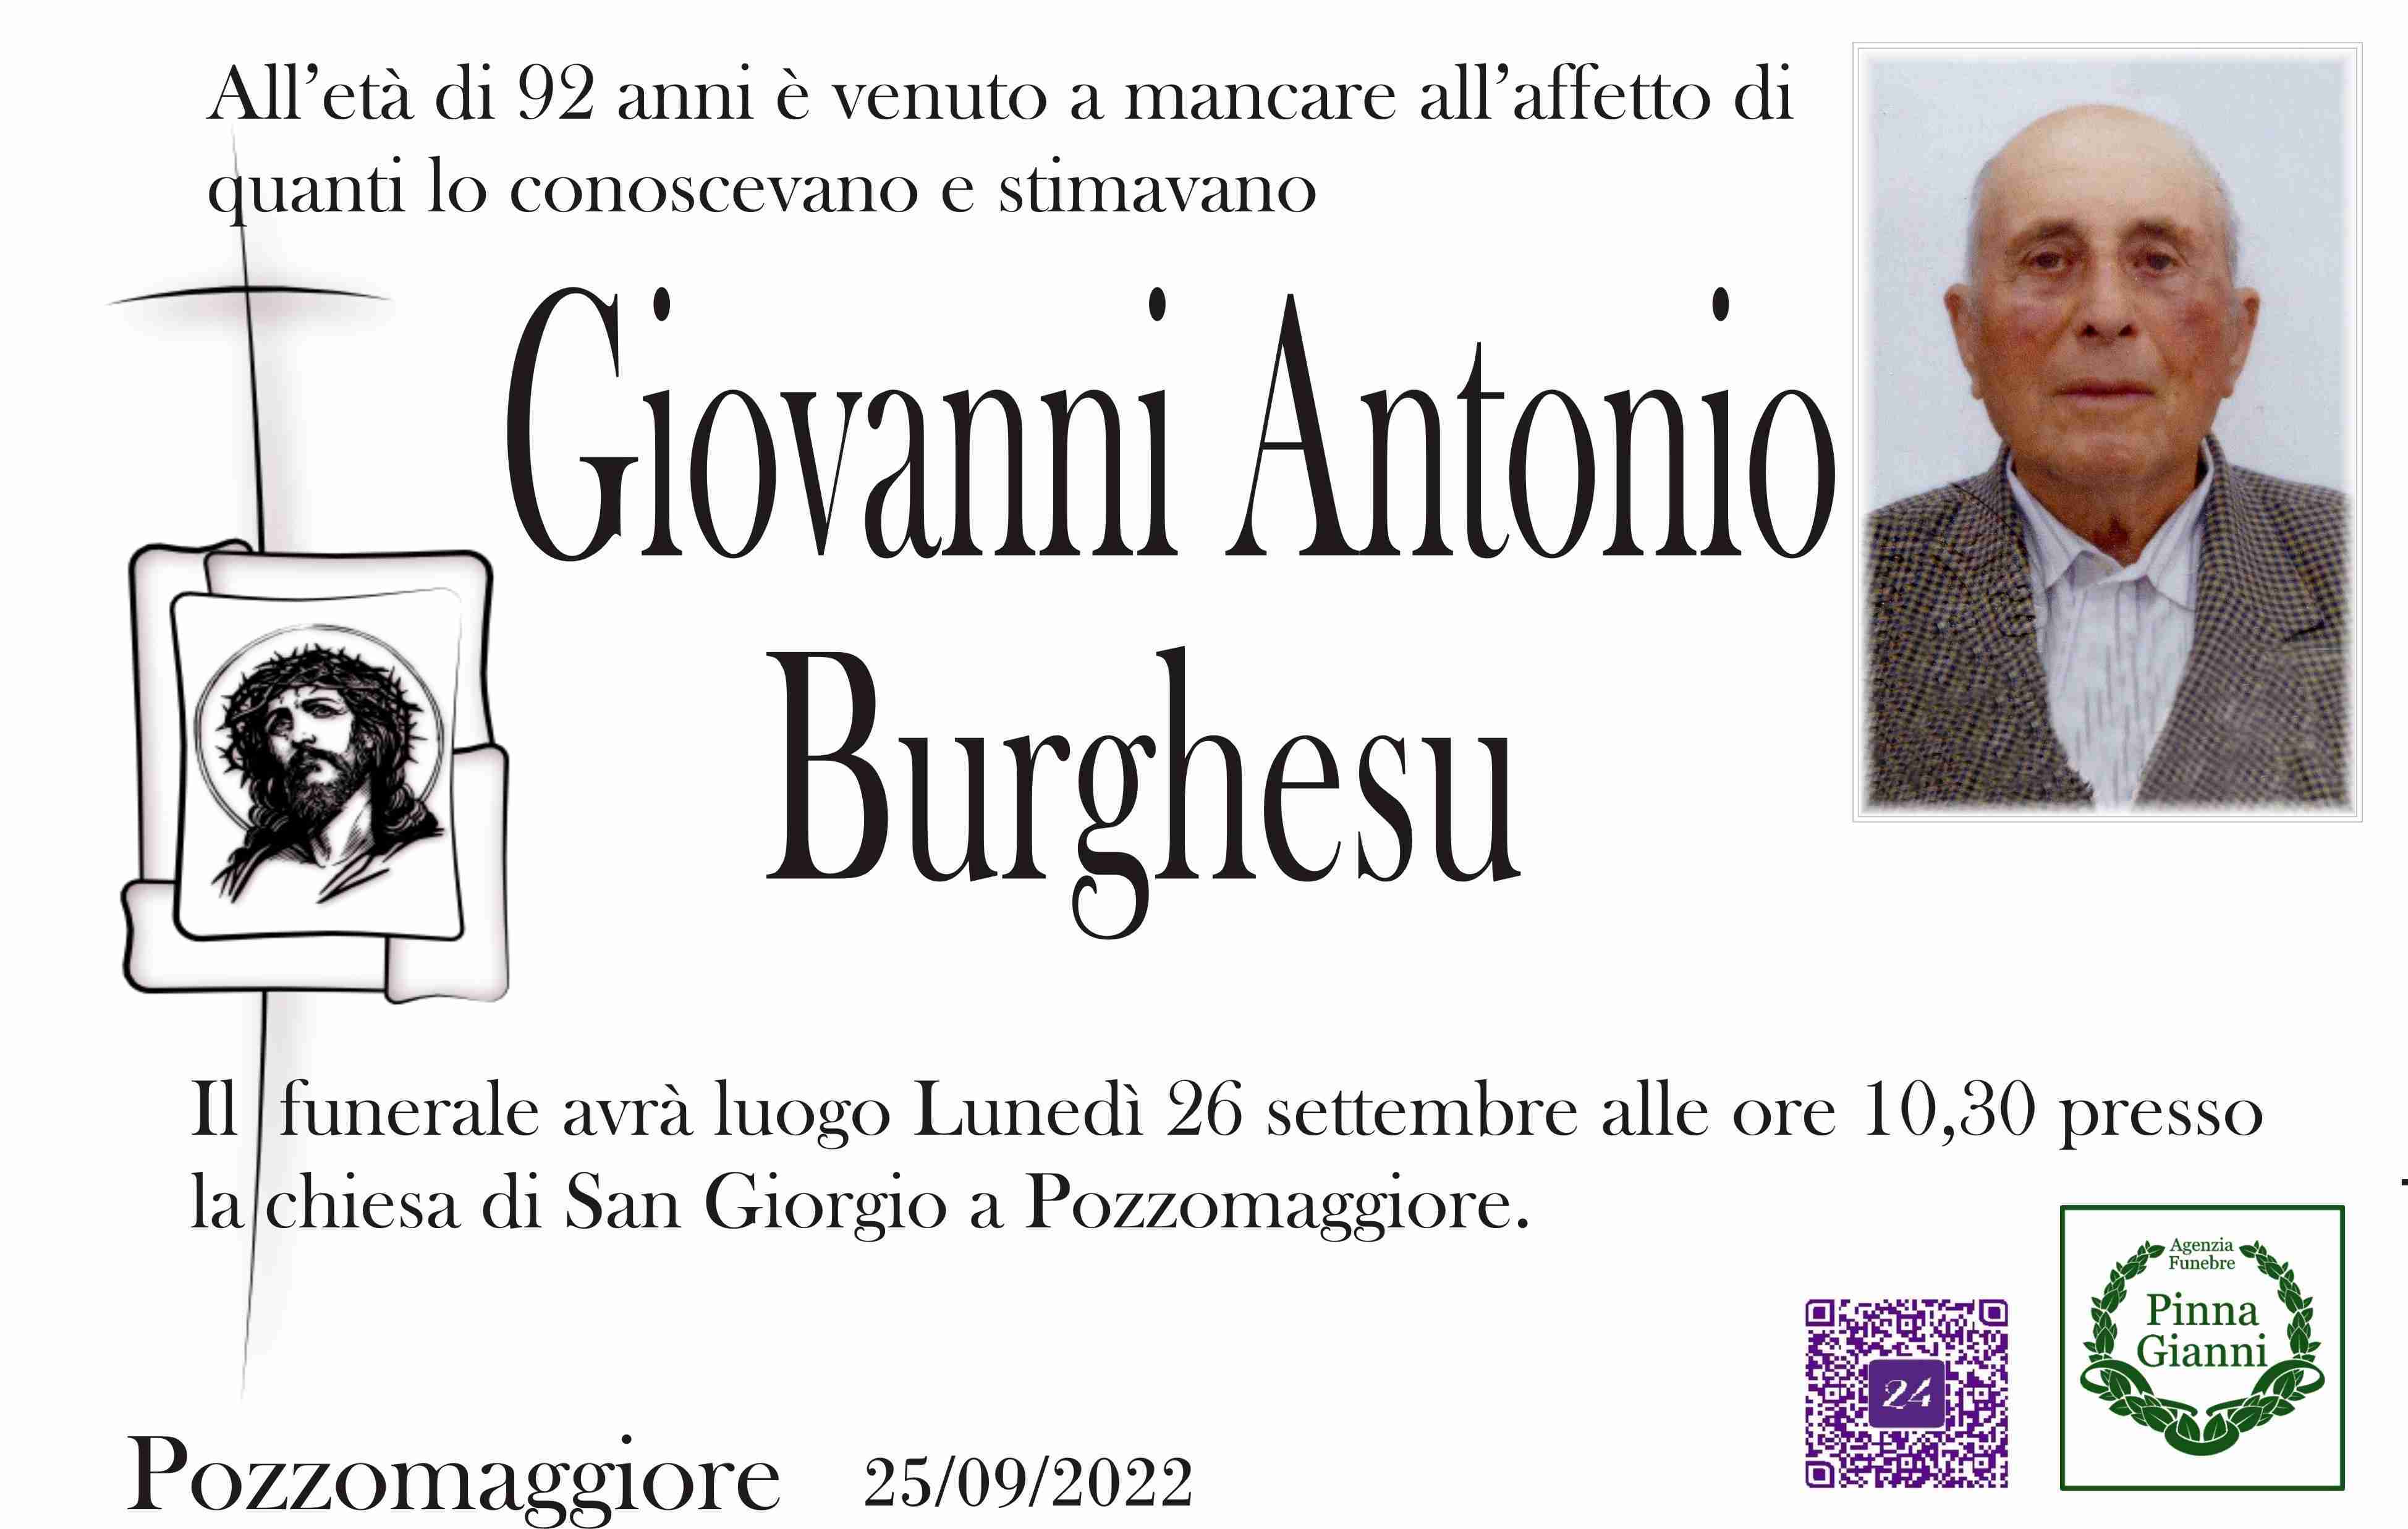 Giovanni Antonio Burghesu